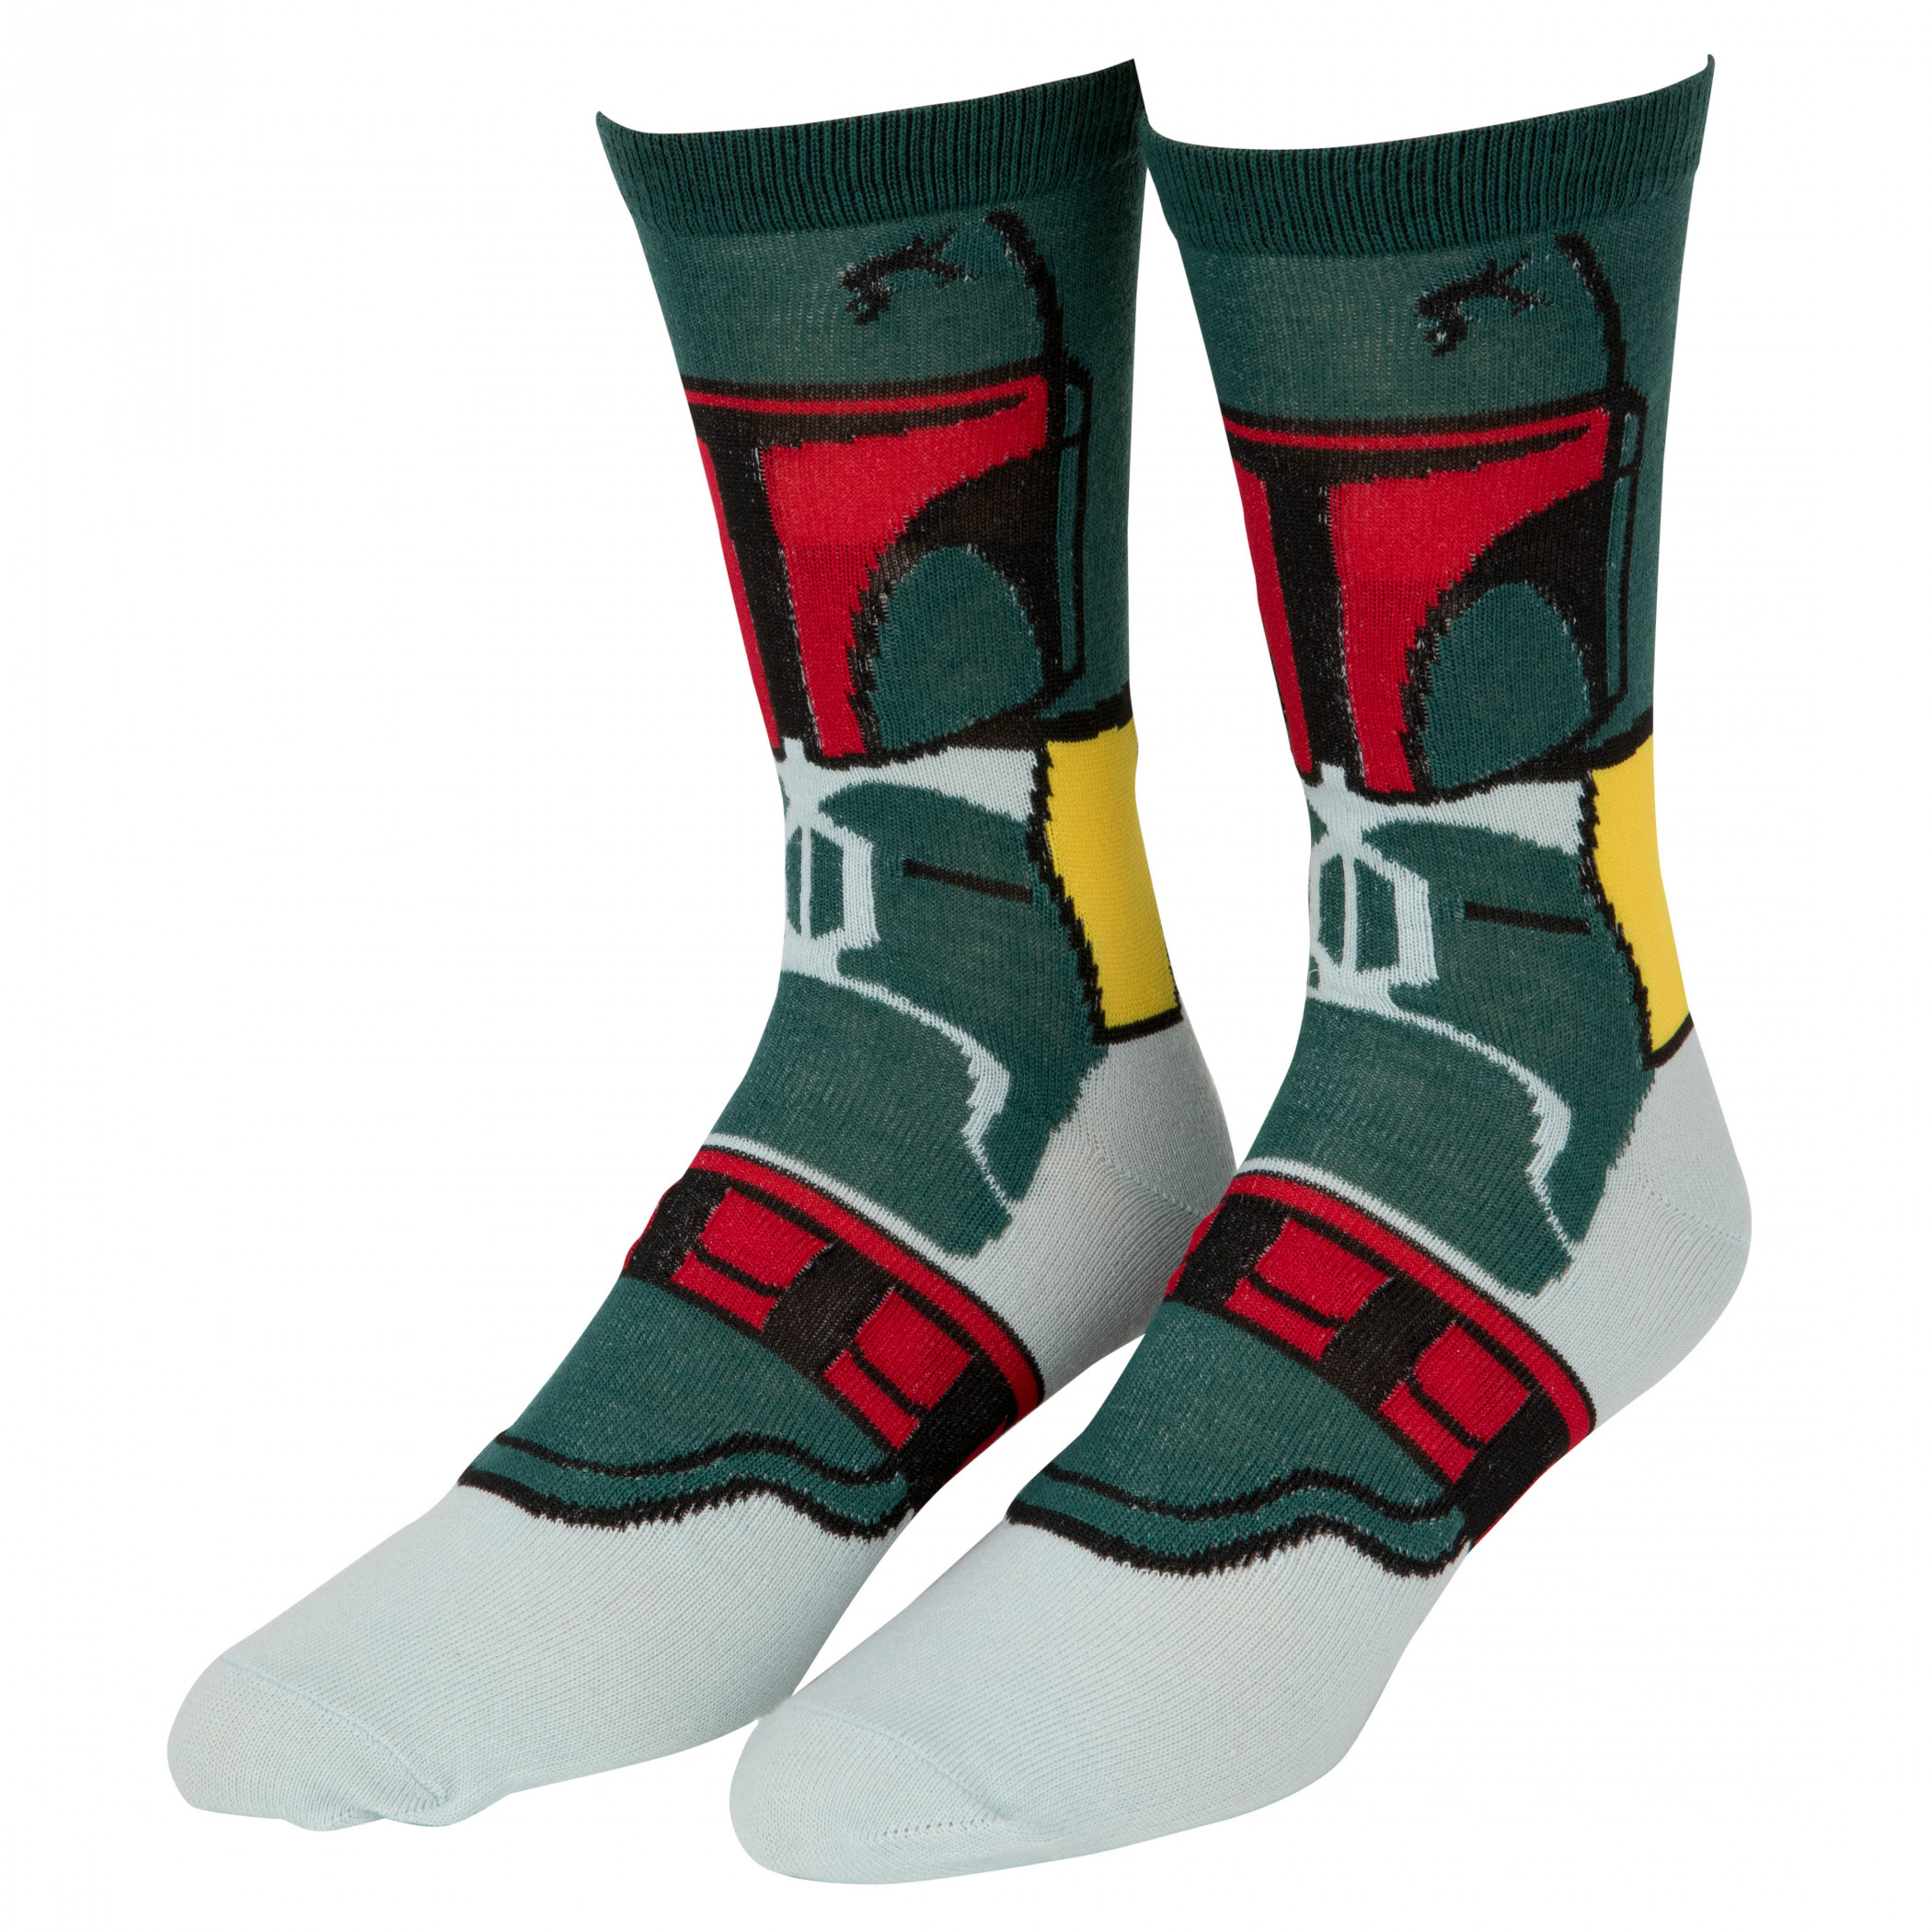 Star Wars Character Print 4-Pack Crew Socks in Gift Box